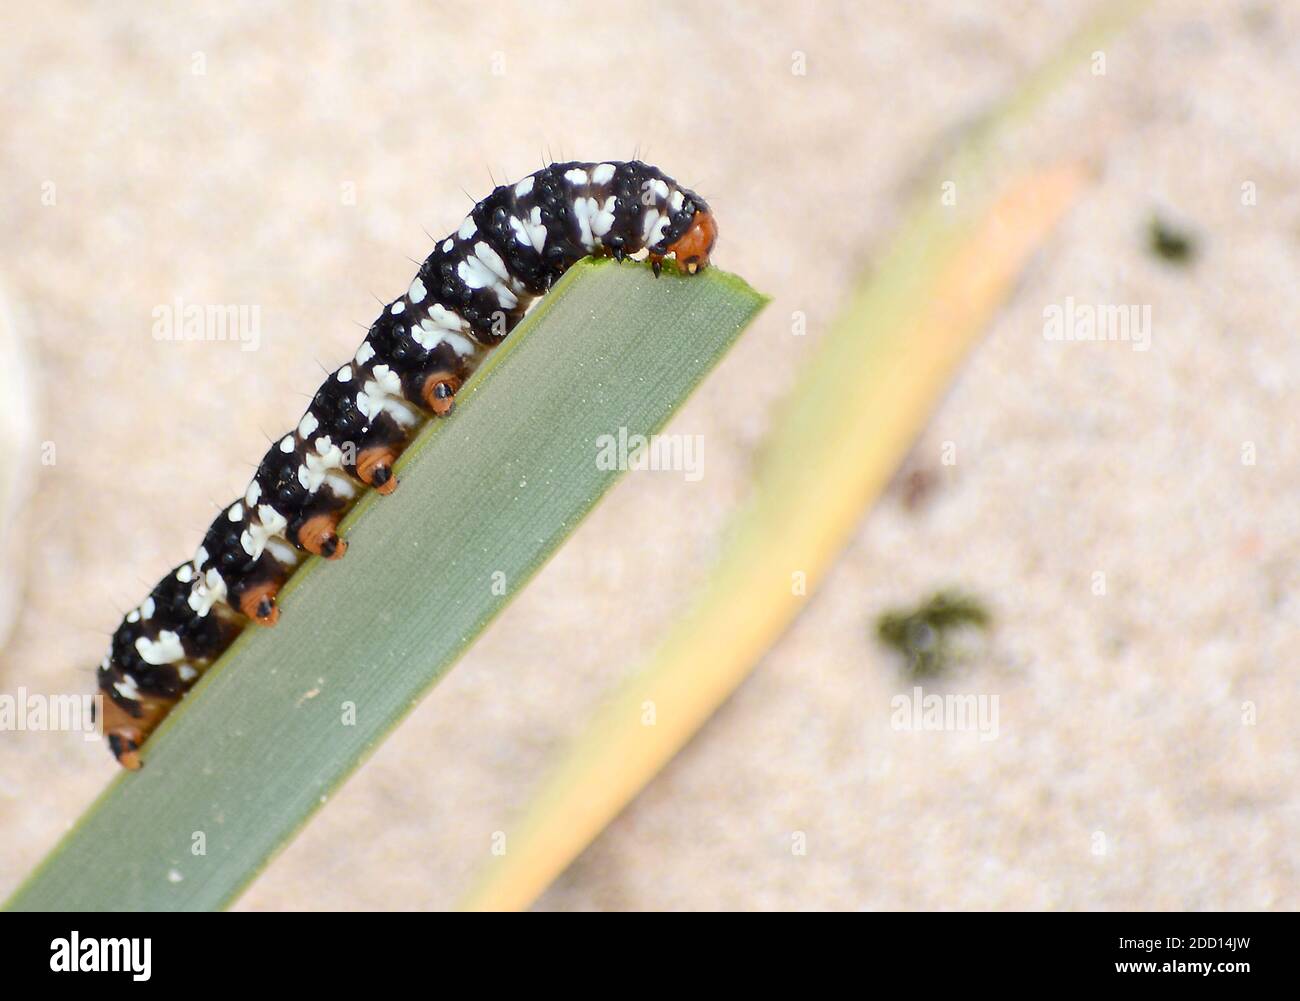 Spanish convict caterpillar (Xanthopastis regnatrix) Stock Photo